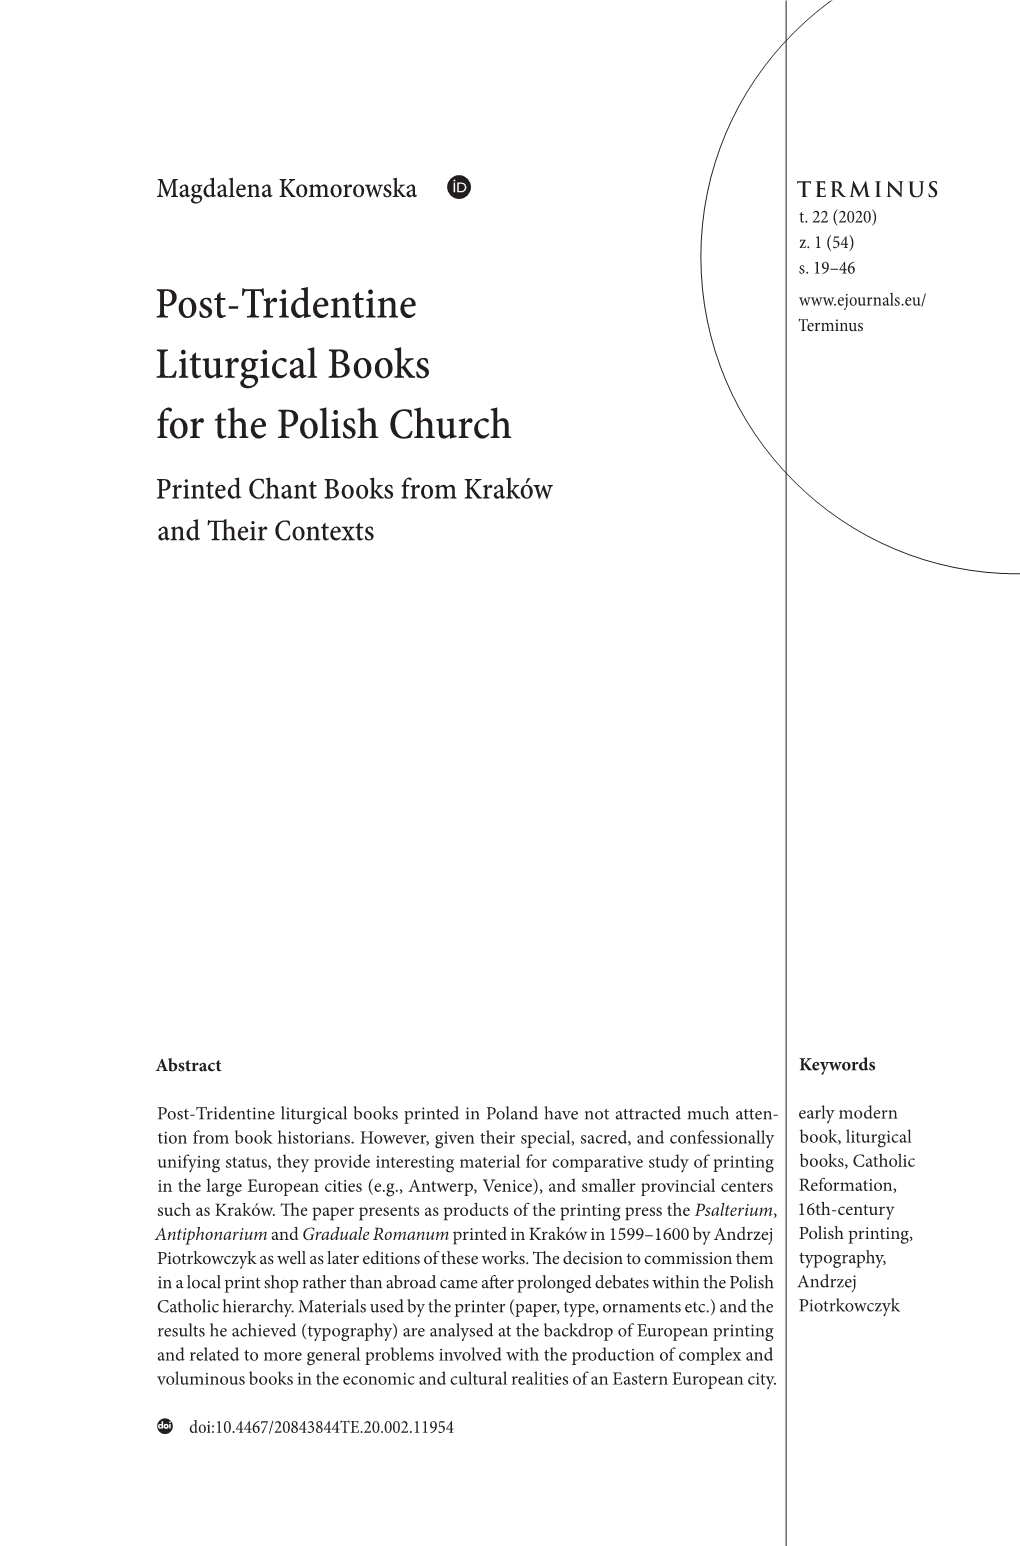 Post-Tridentine Liturgical Books for the Polish Church. Printed Chant Books